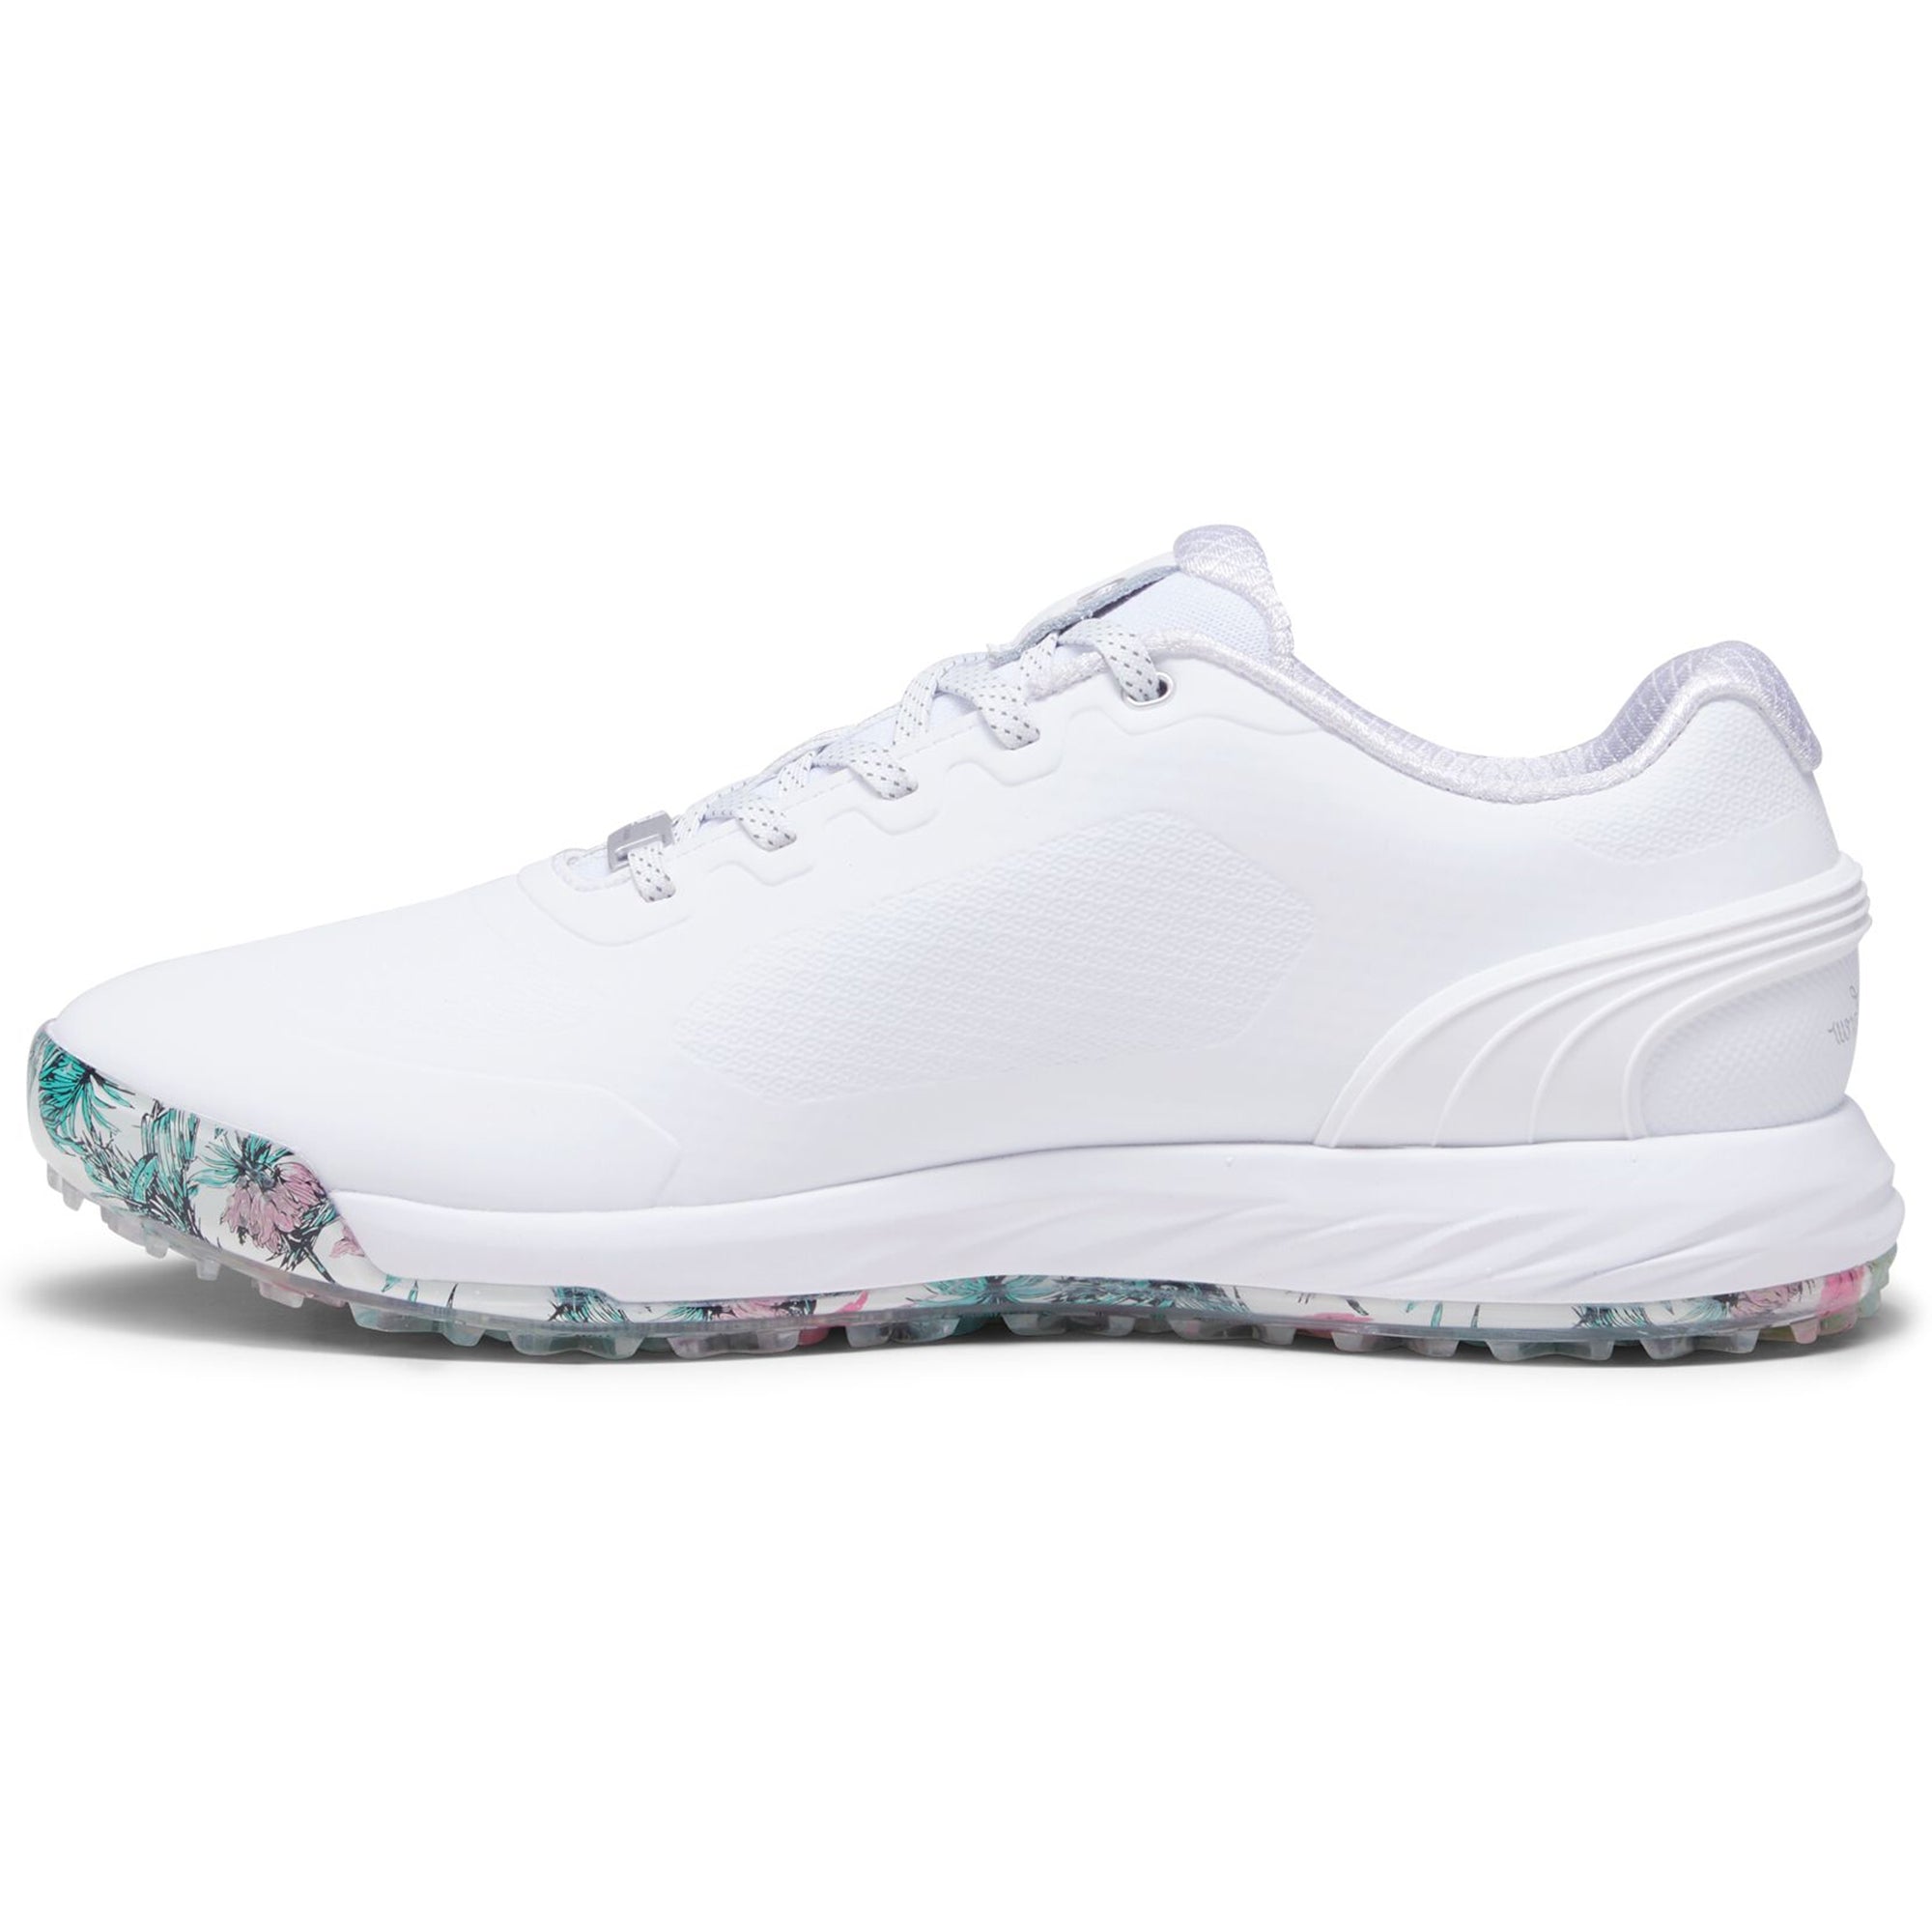 puma-x-ptc-alphacat-nitro-golf-shoes-379340-puma-white-aqua-green-shocking-pink-01